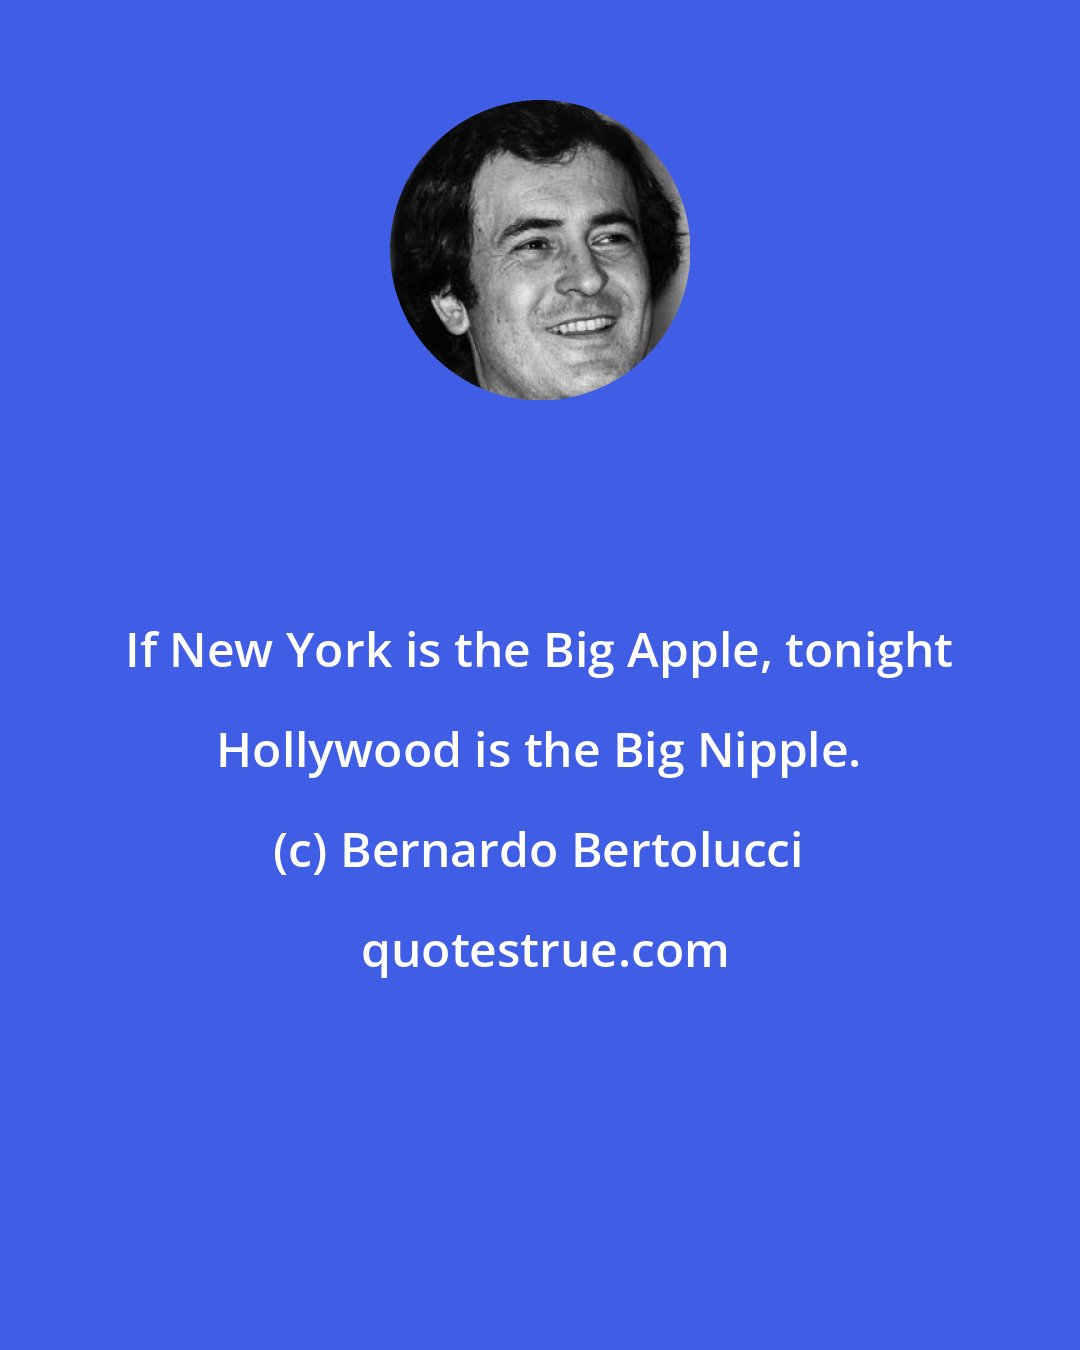 Bernardo Bertolucci: If New York is the Big Apple, tonight Hollywood is the Big Nipple.